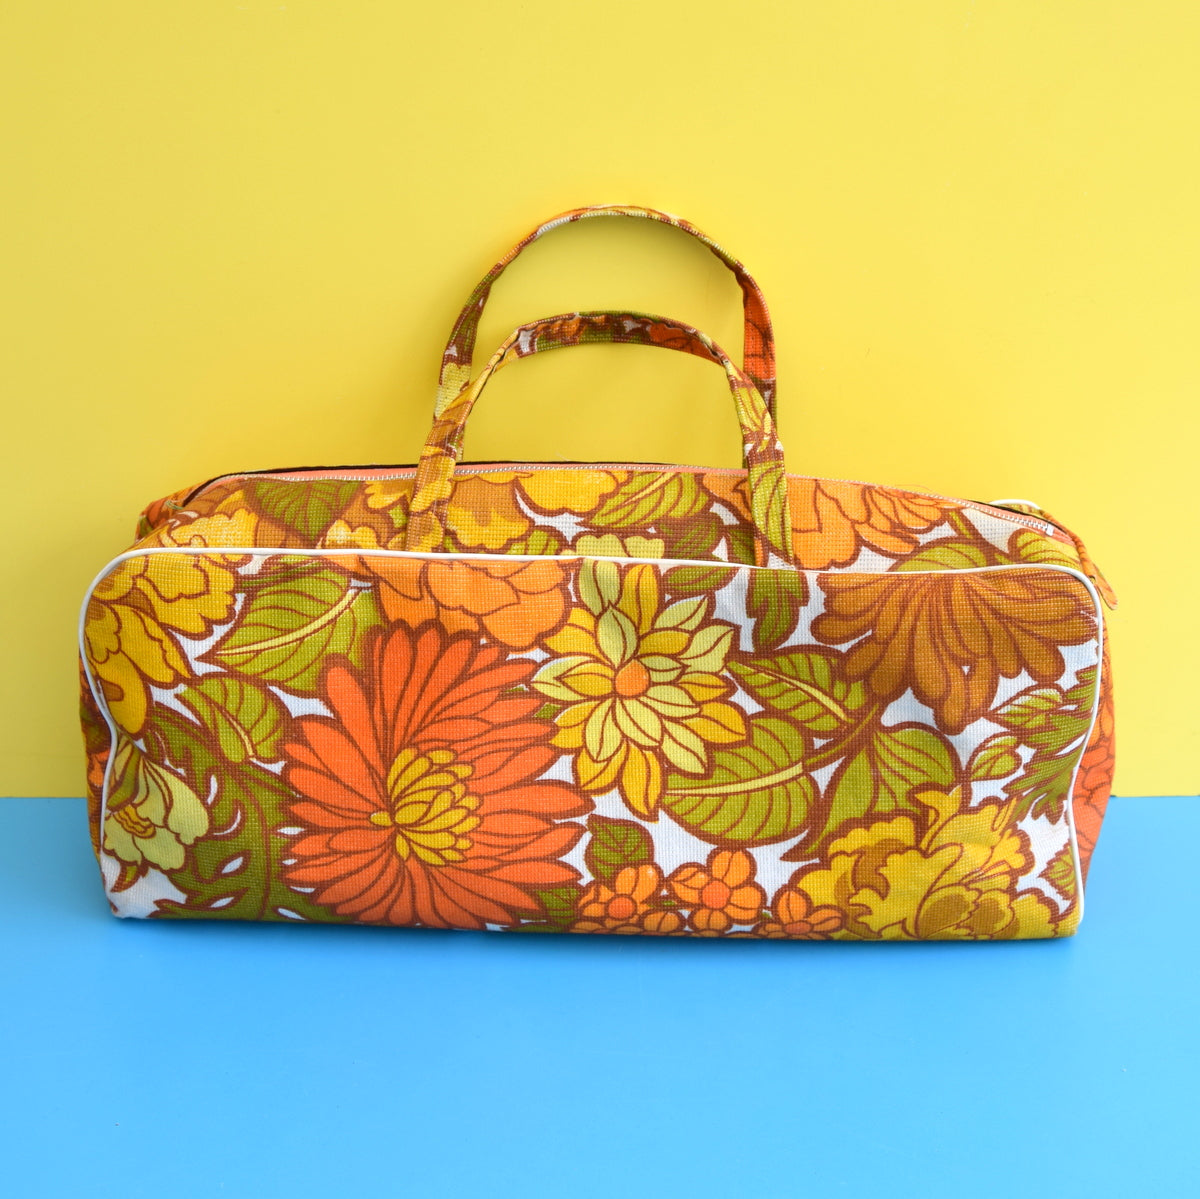 Vintage 1960s Knitting Bag / Storage Bag - Flower Power - Orange